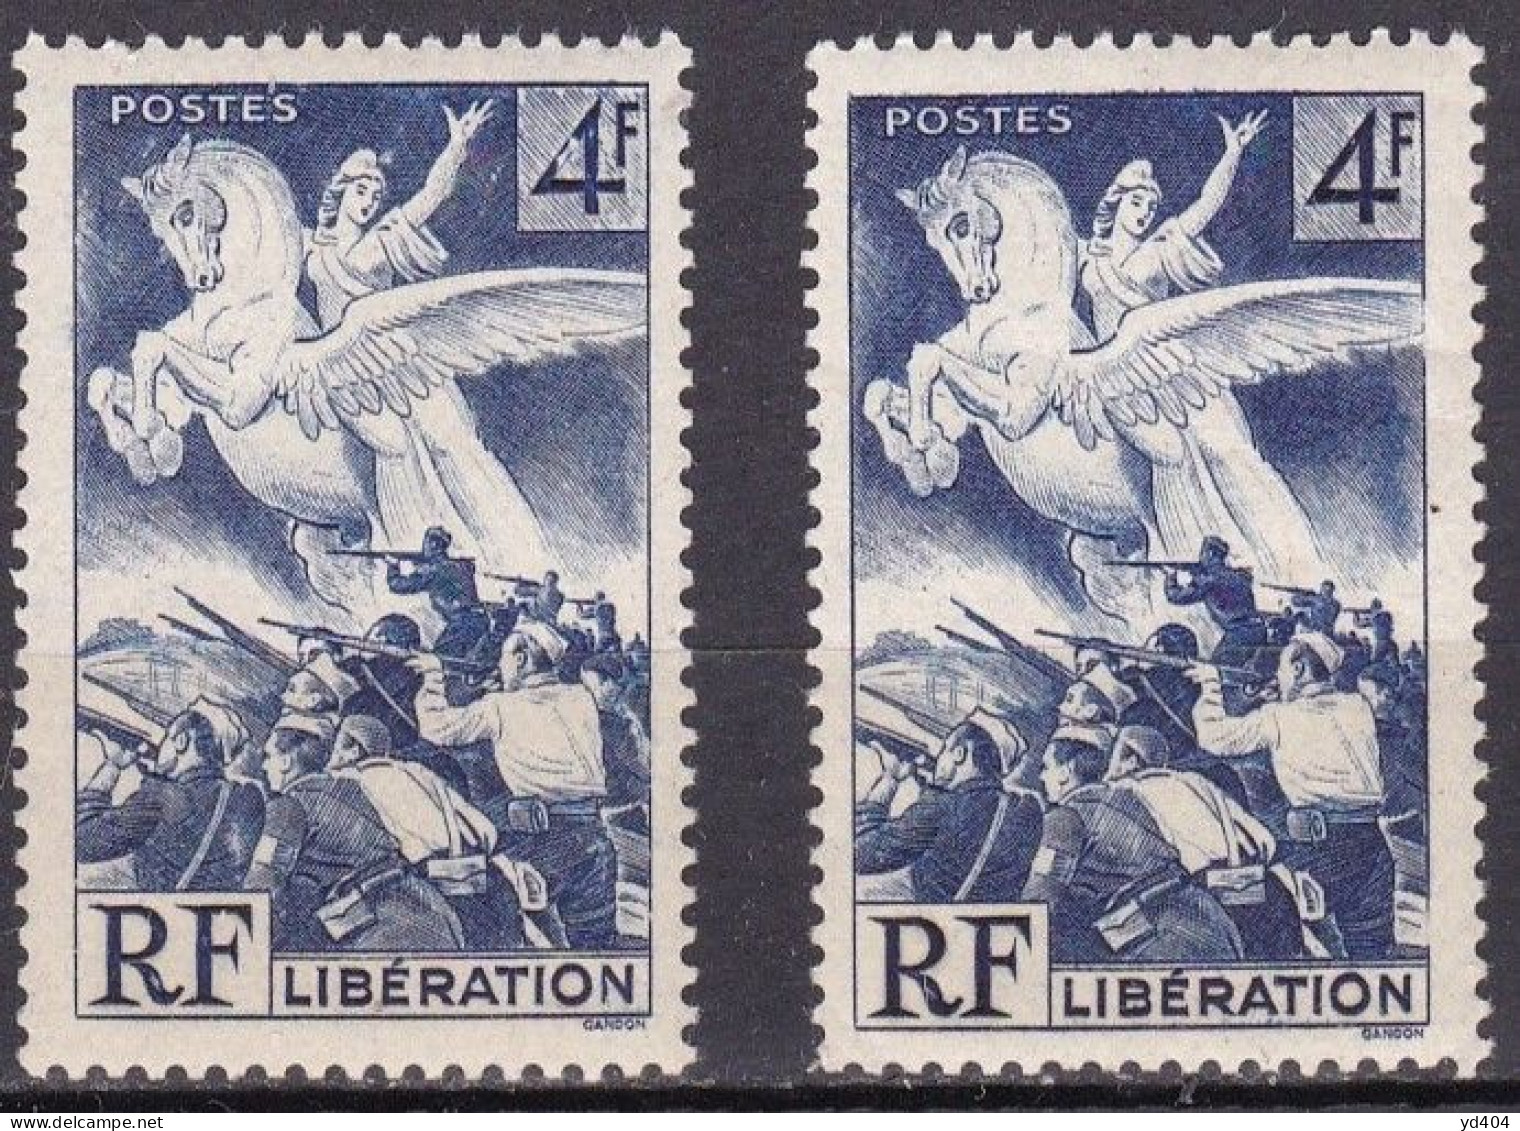 FR7112 - FRANCE – 1945 – LIBERATION - Y&T # 669a MNH - Ungebraucht